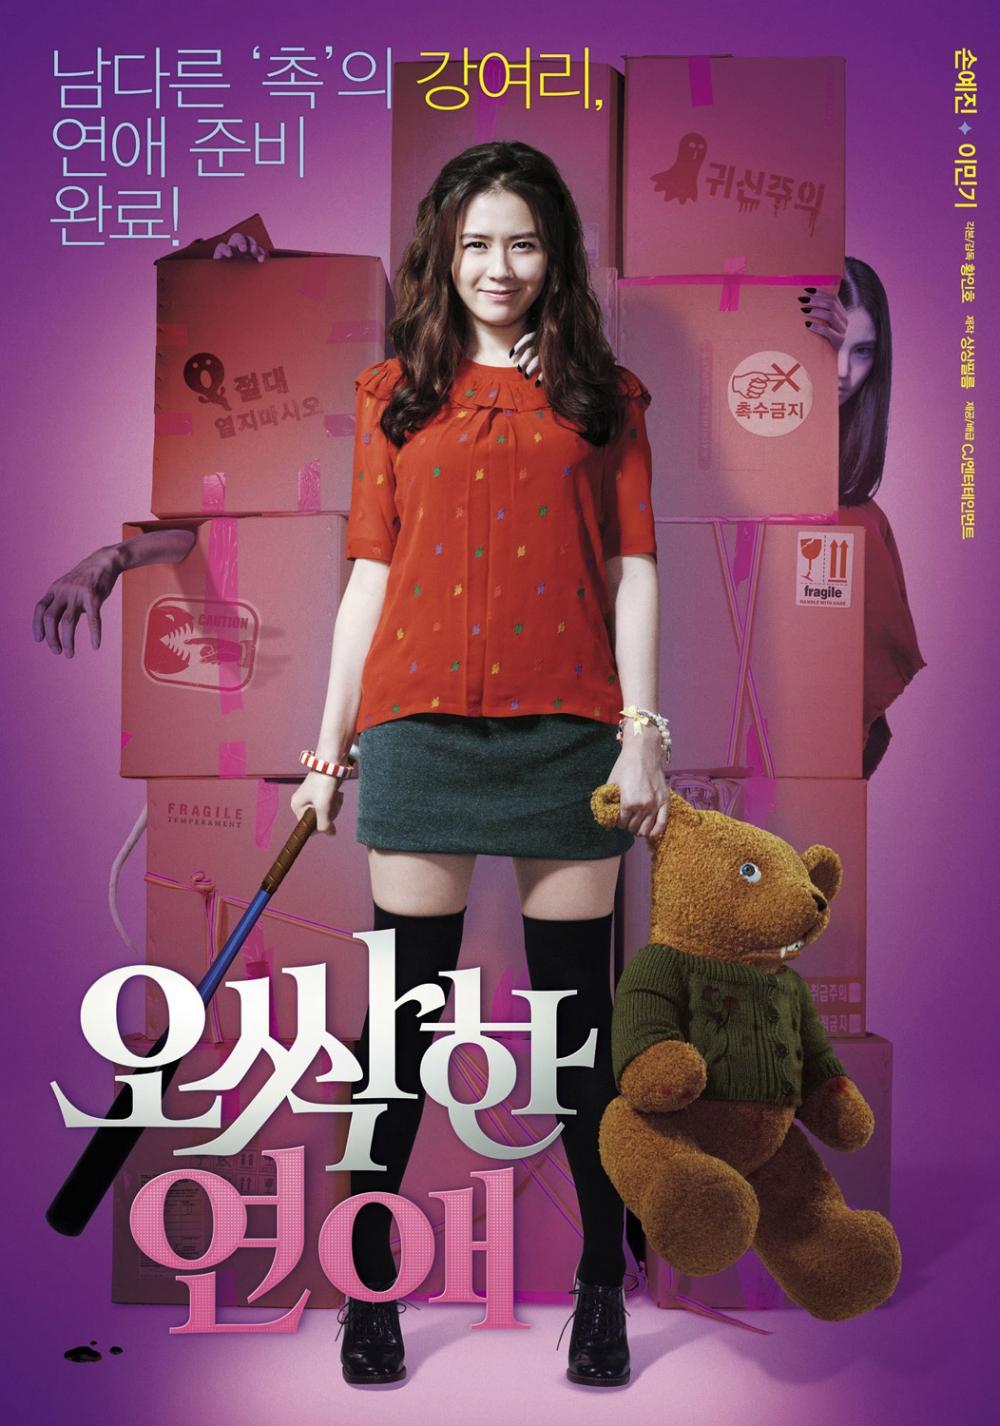 South Korea Character Poster #1